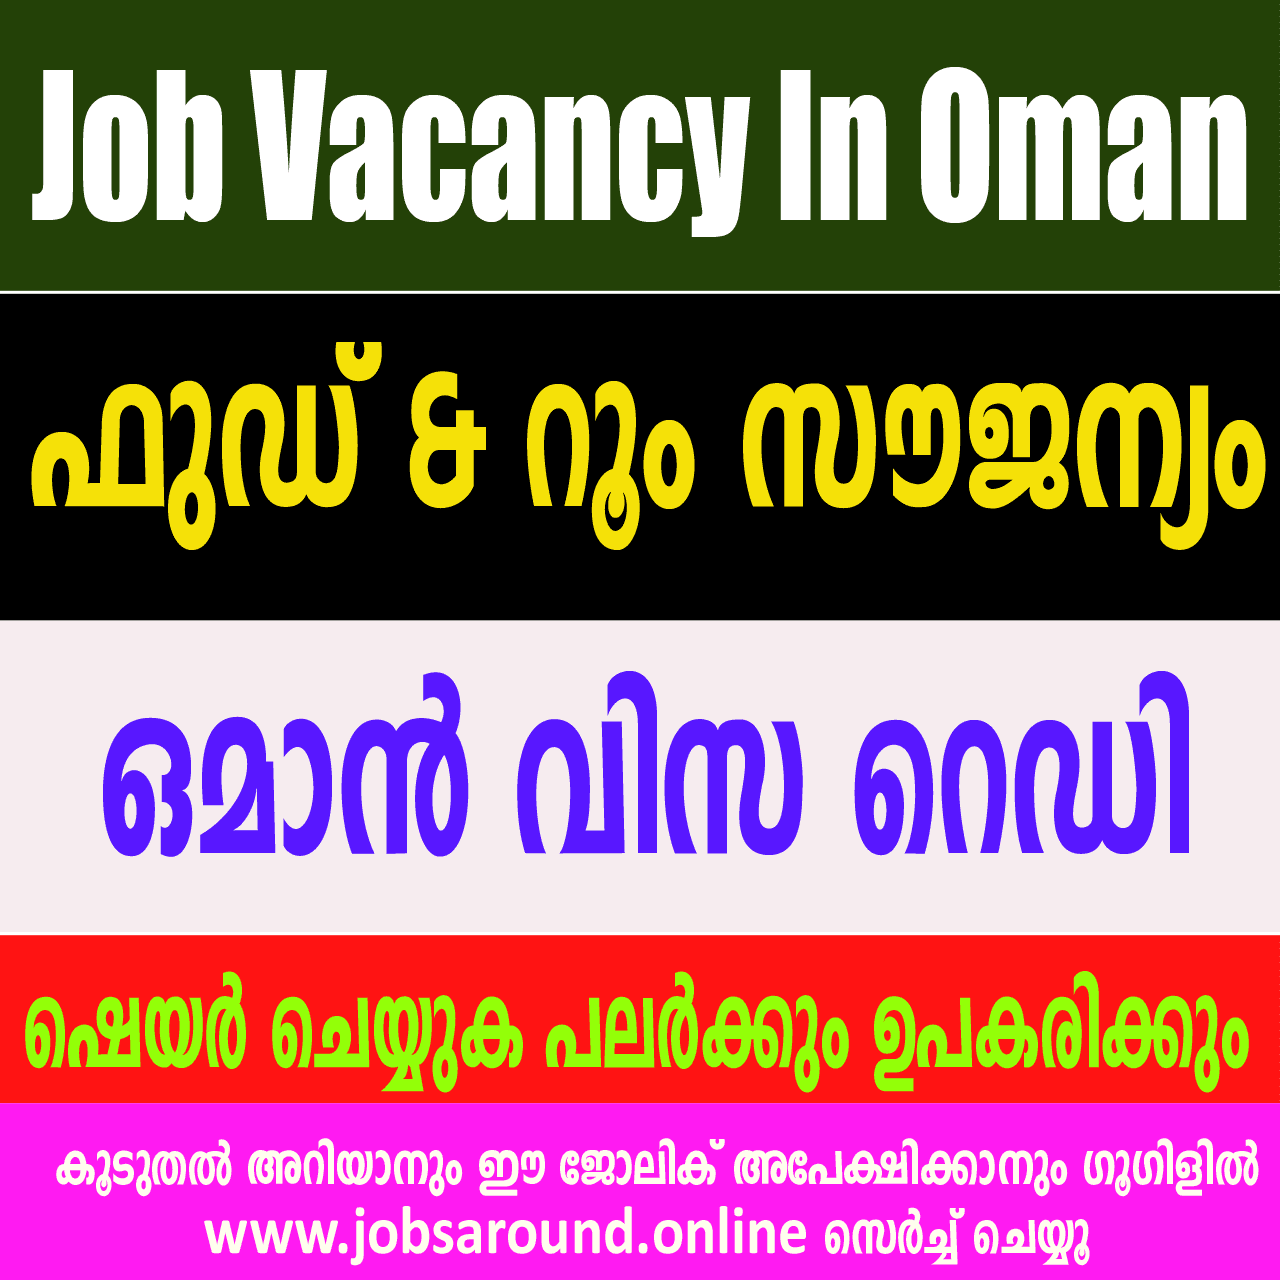 Latest Job Vacancy In Oman With Free Visa 2021